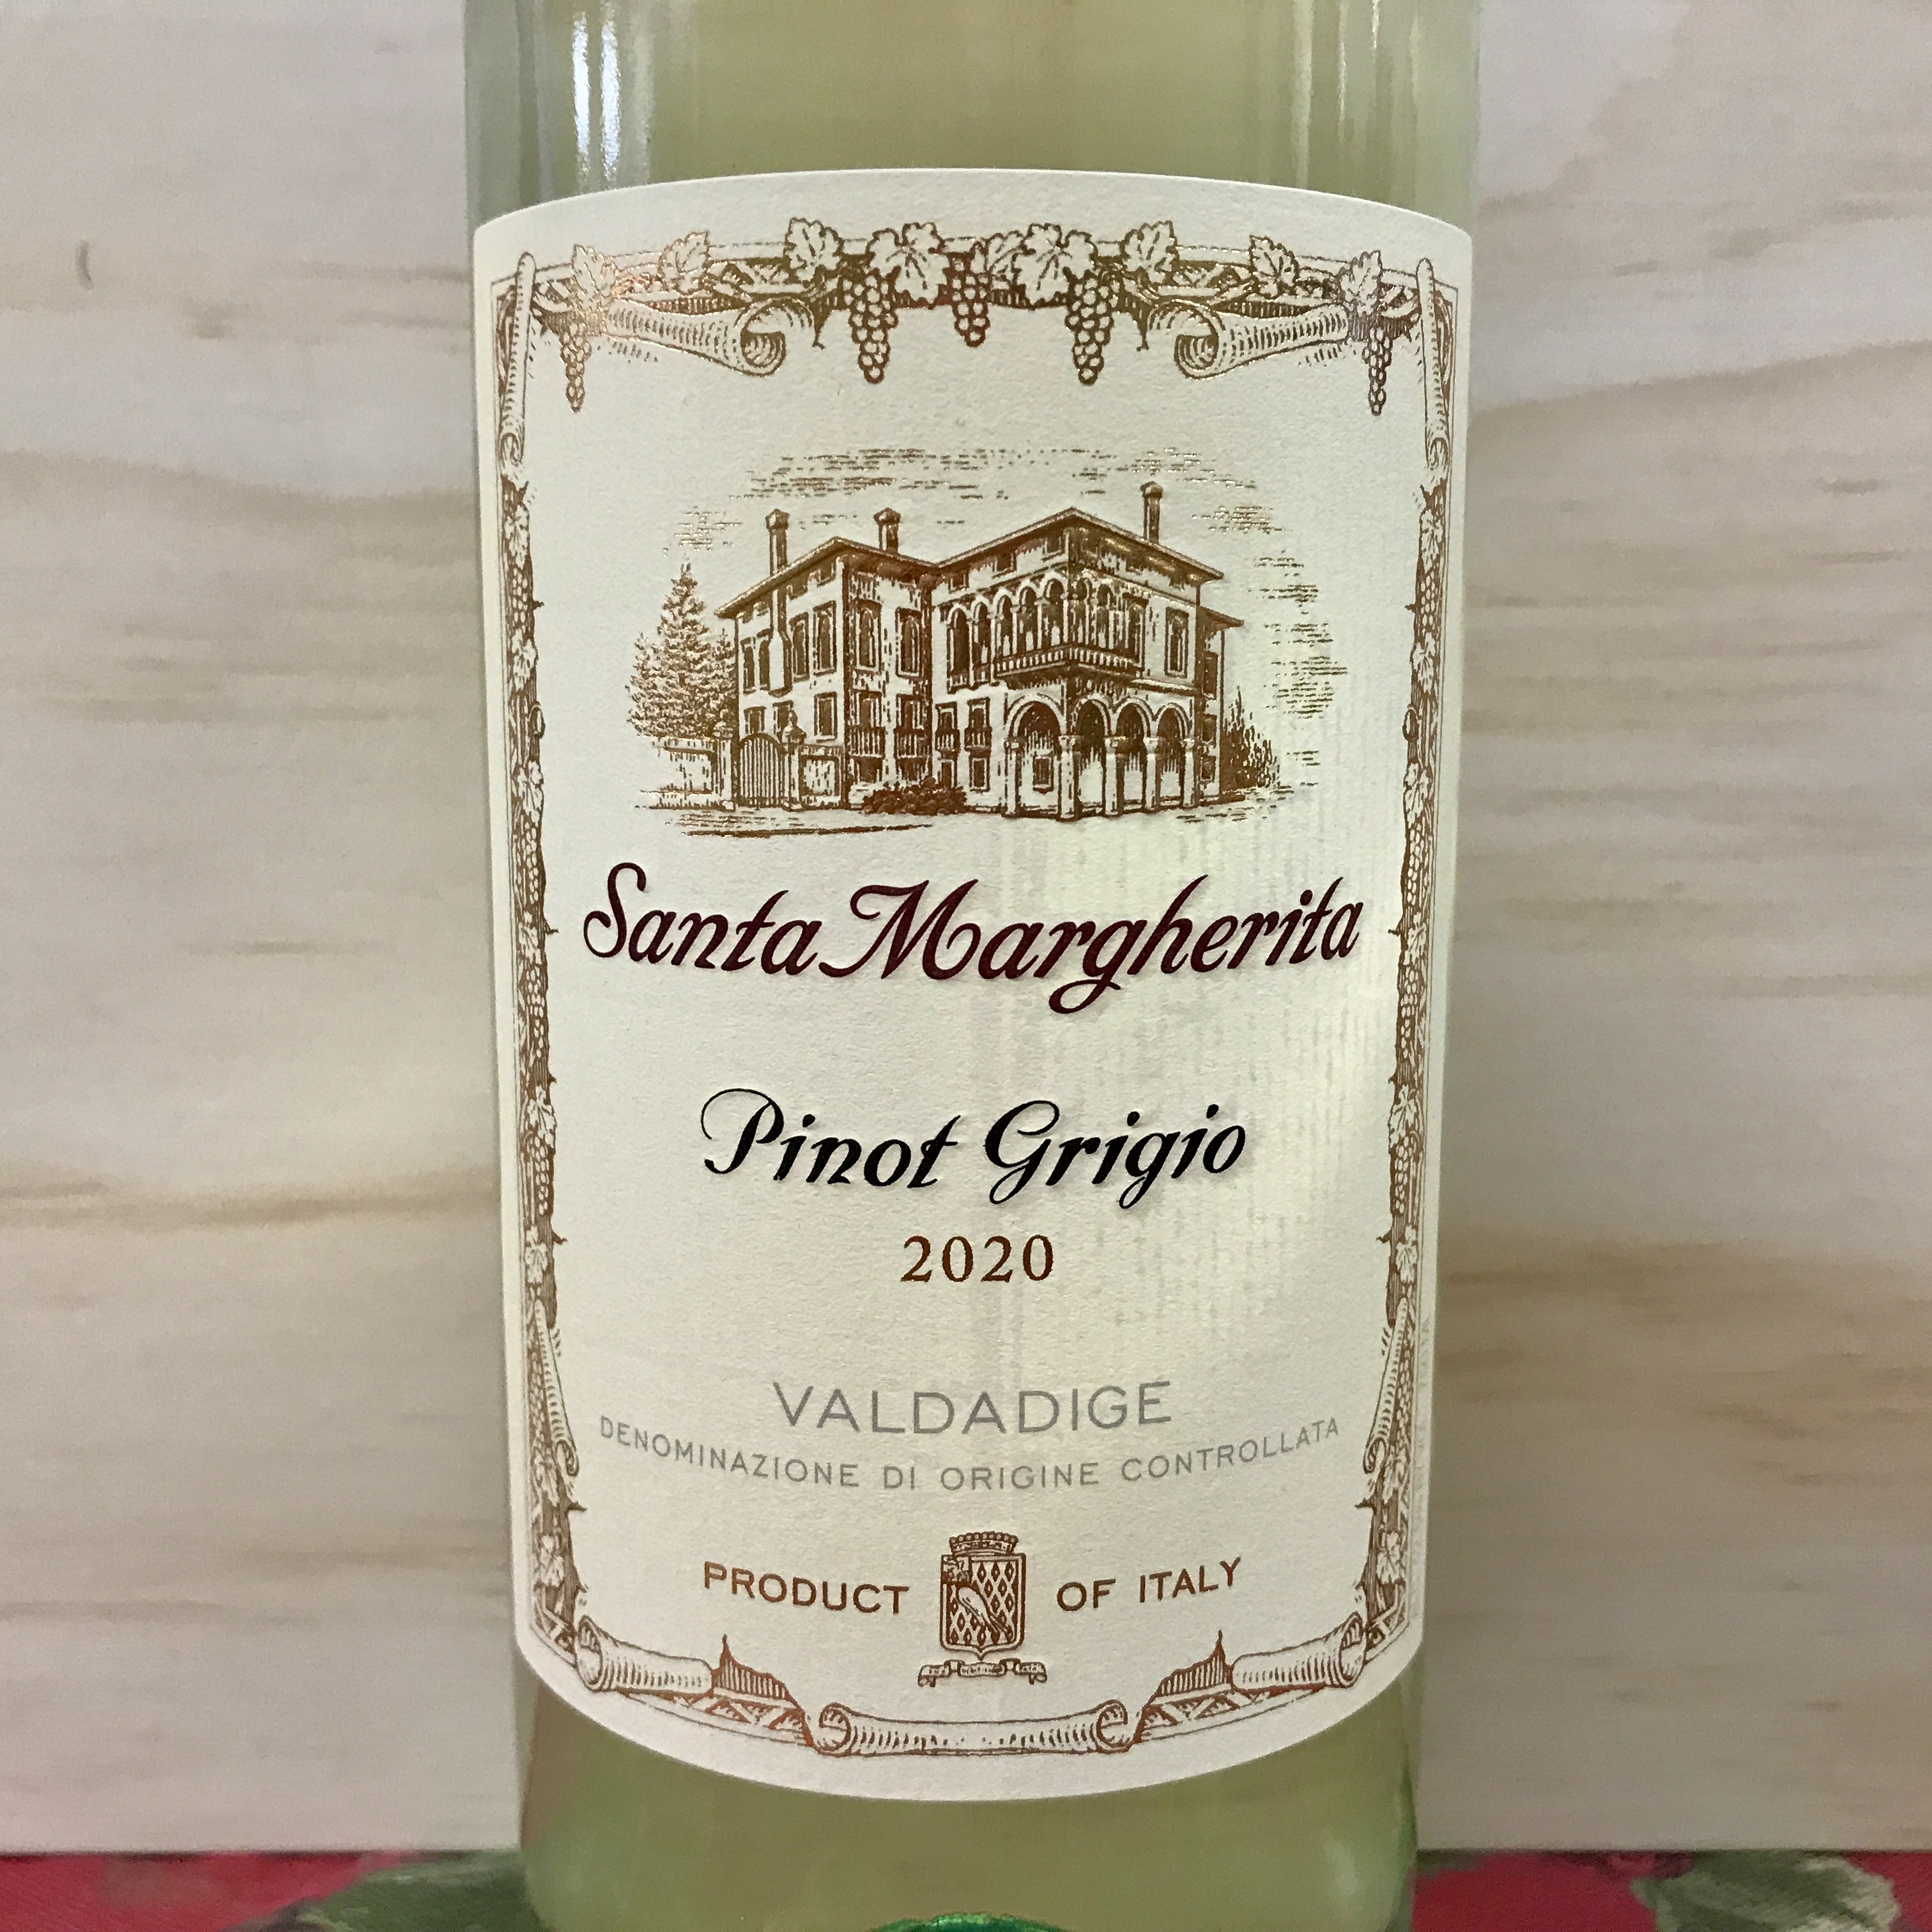 Santa Margherita Valdadige Pinot Grigio 2020